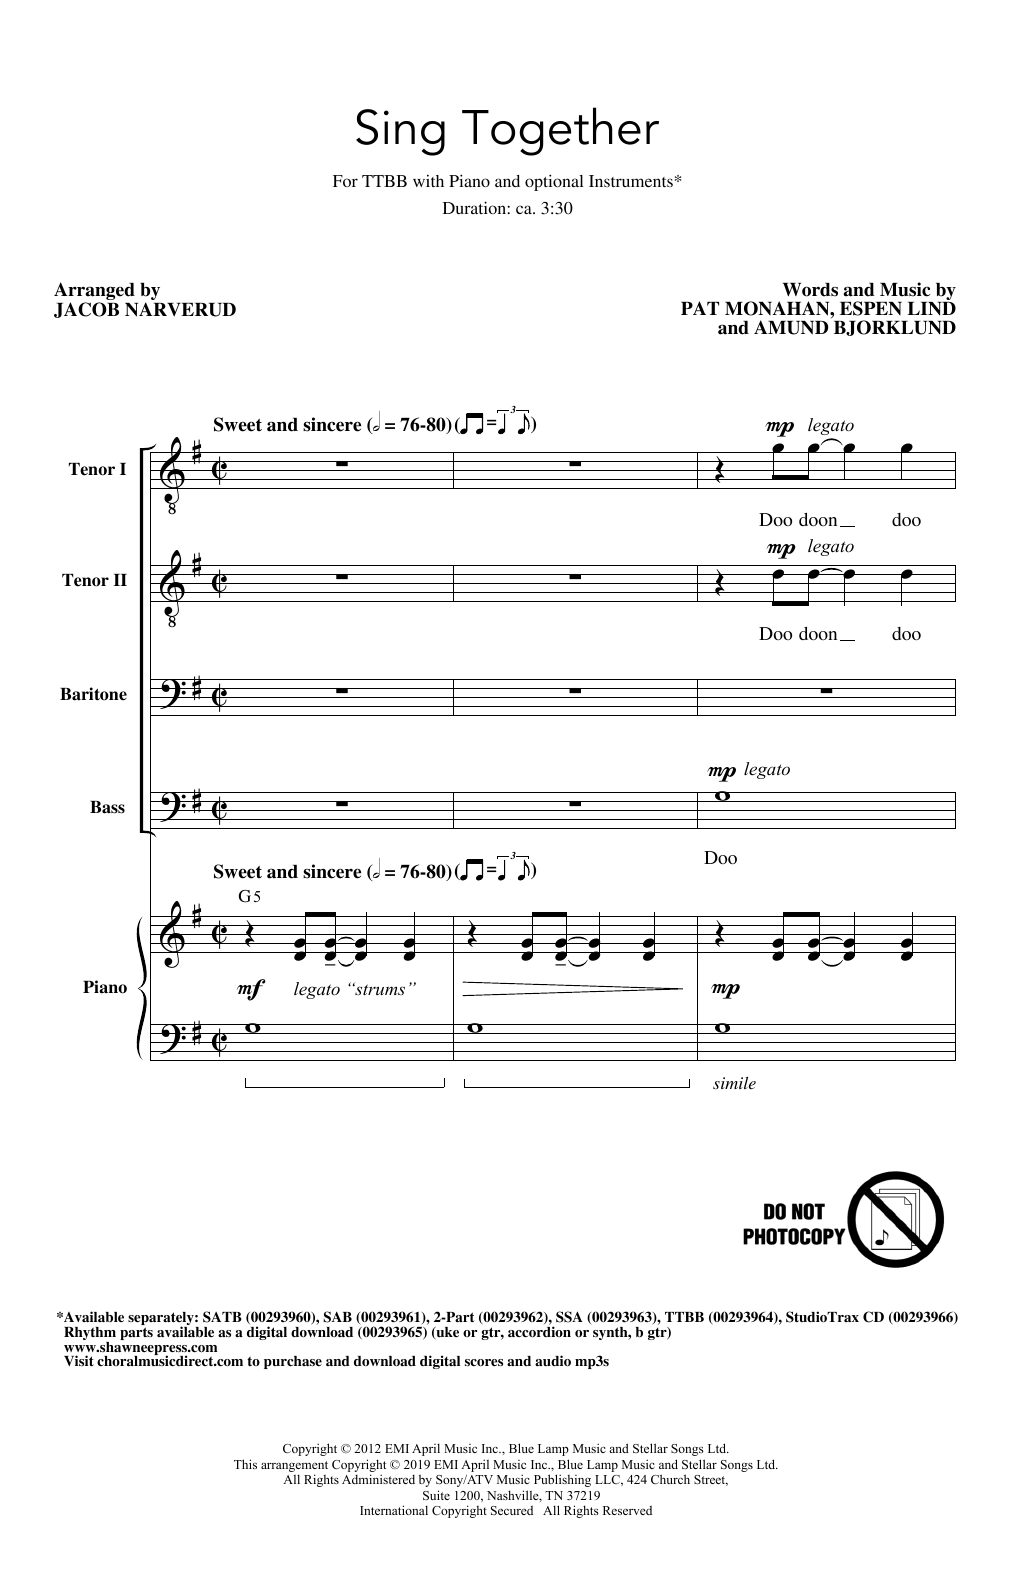 Train Sing Together (arr. Jacob Narverud) Sheet Music Notes & Chords for 2-Part Choir - Download or Print PDF